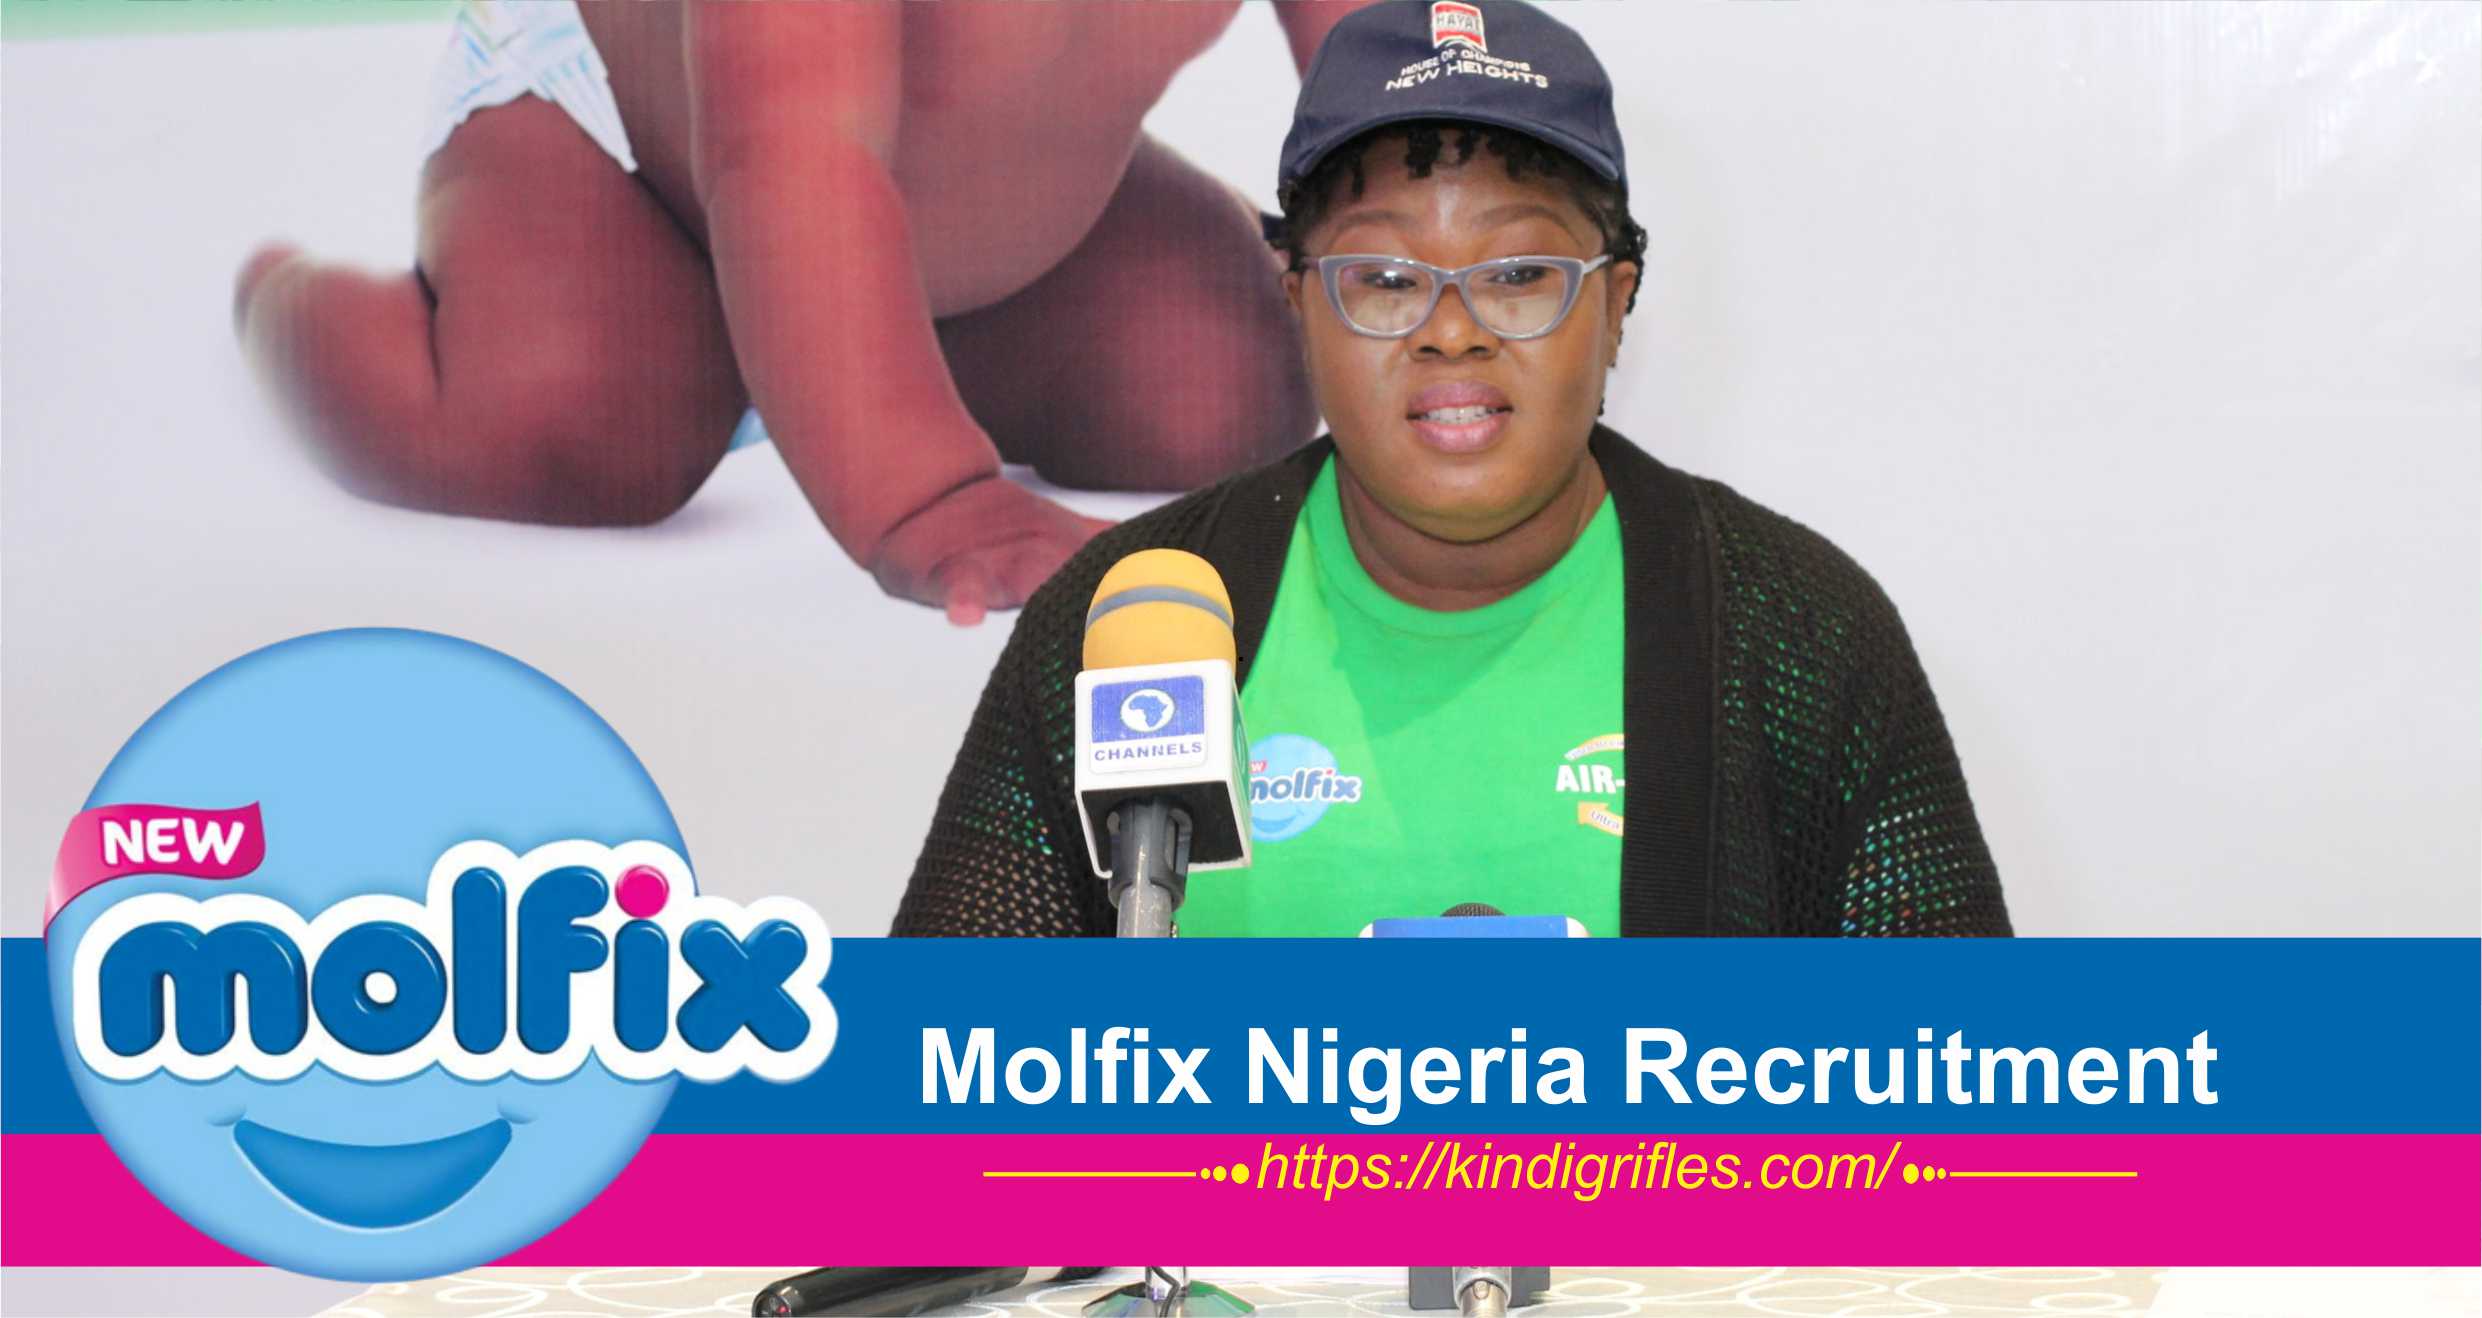 Molfix Nigeria Recruitment